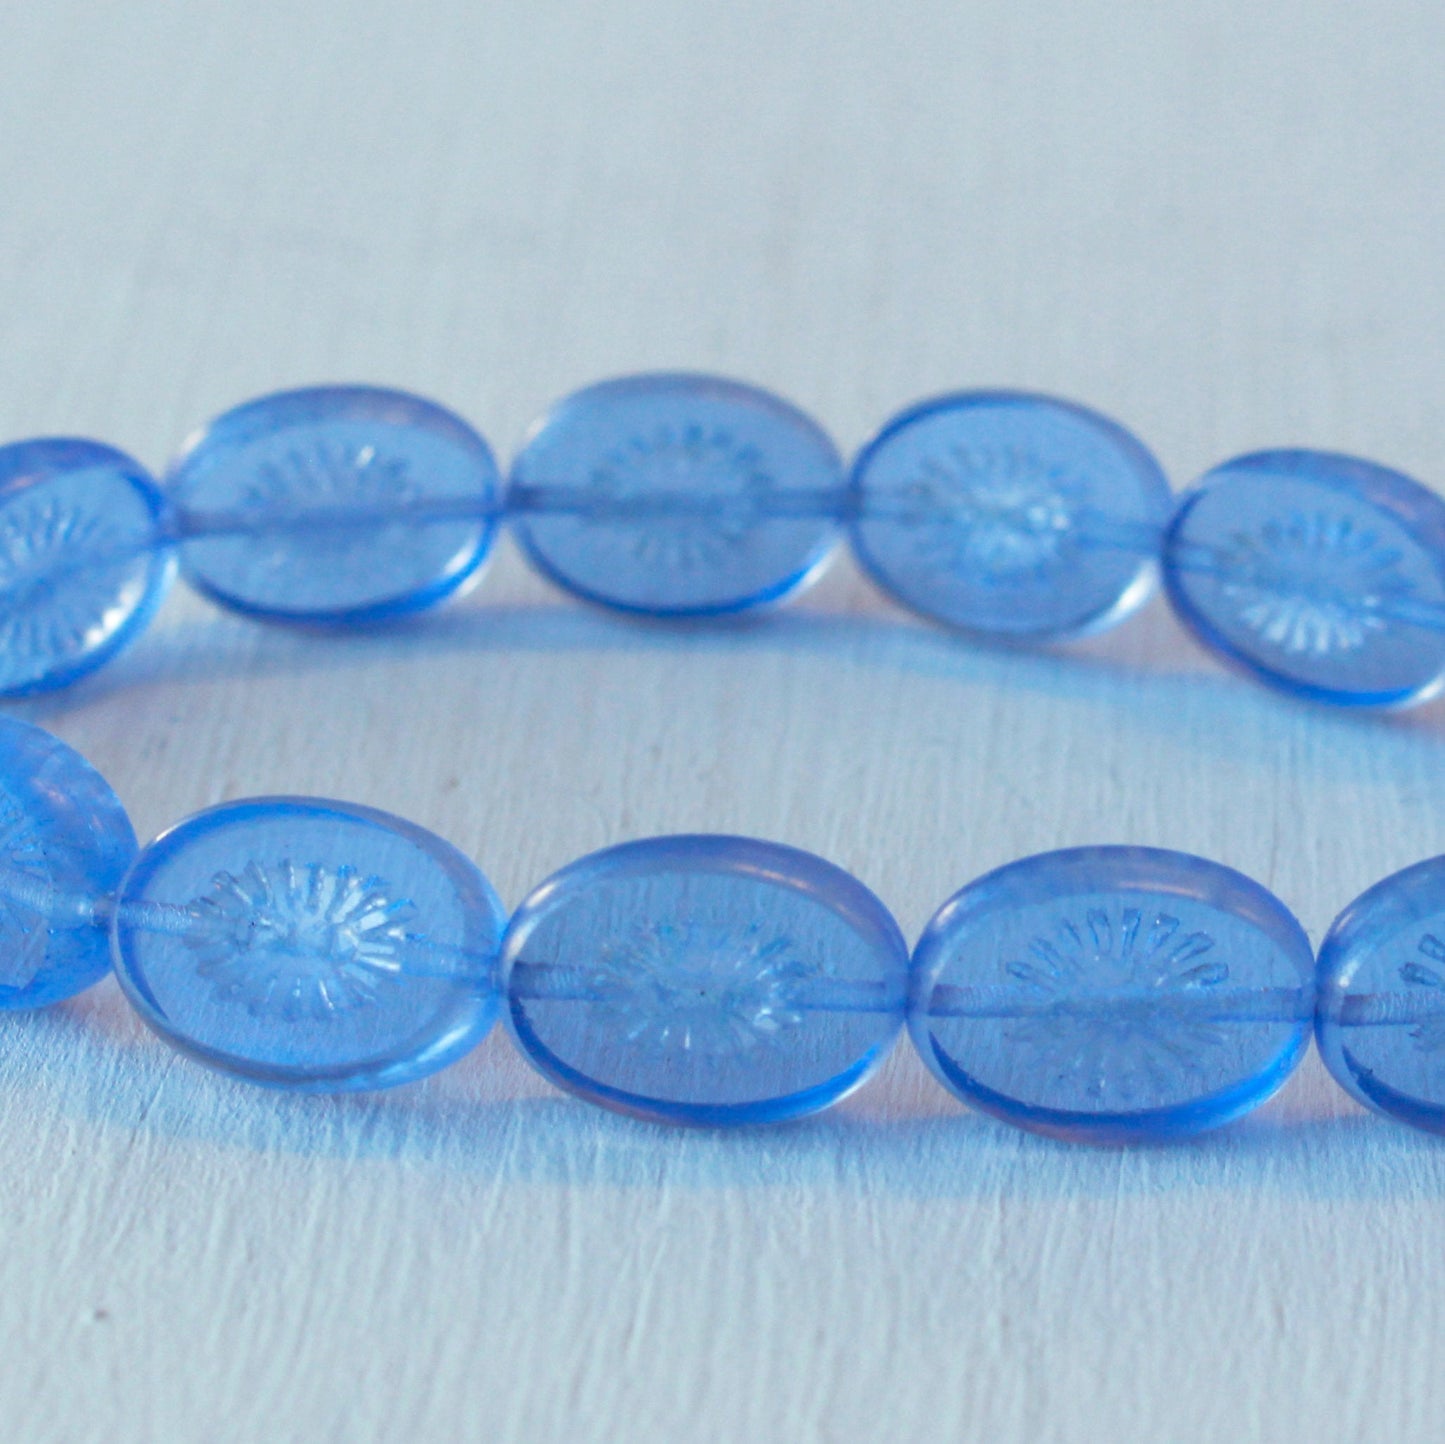 12x14mm Glass Kiwi Beads - Sky Blue - 10 Beads